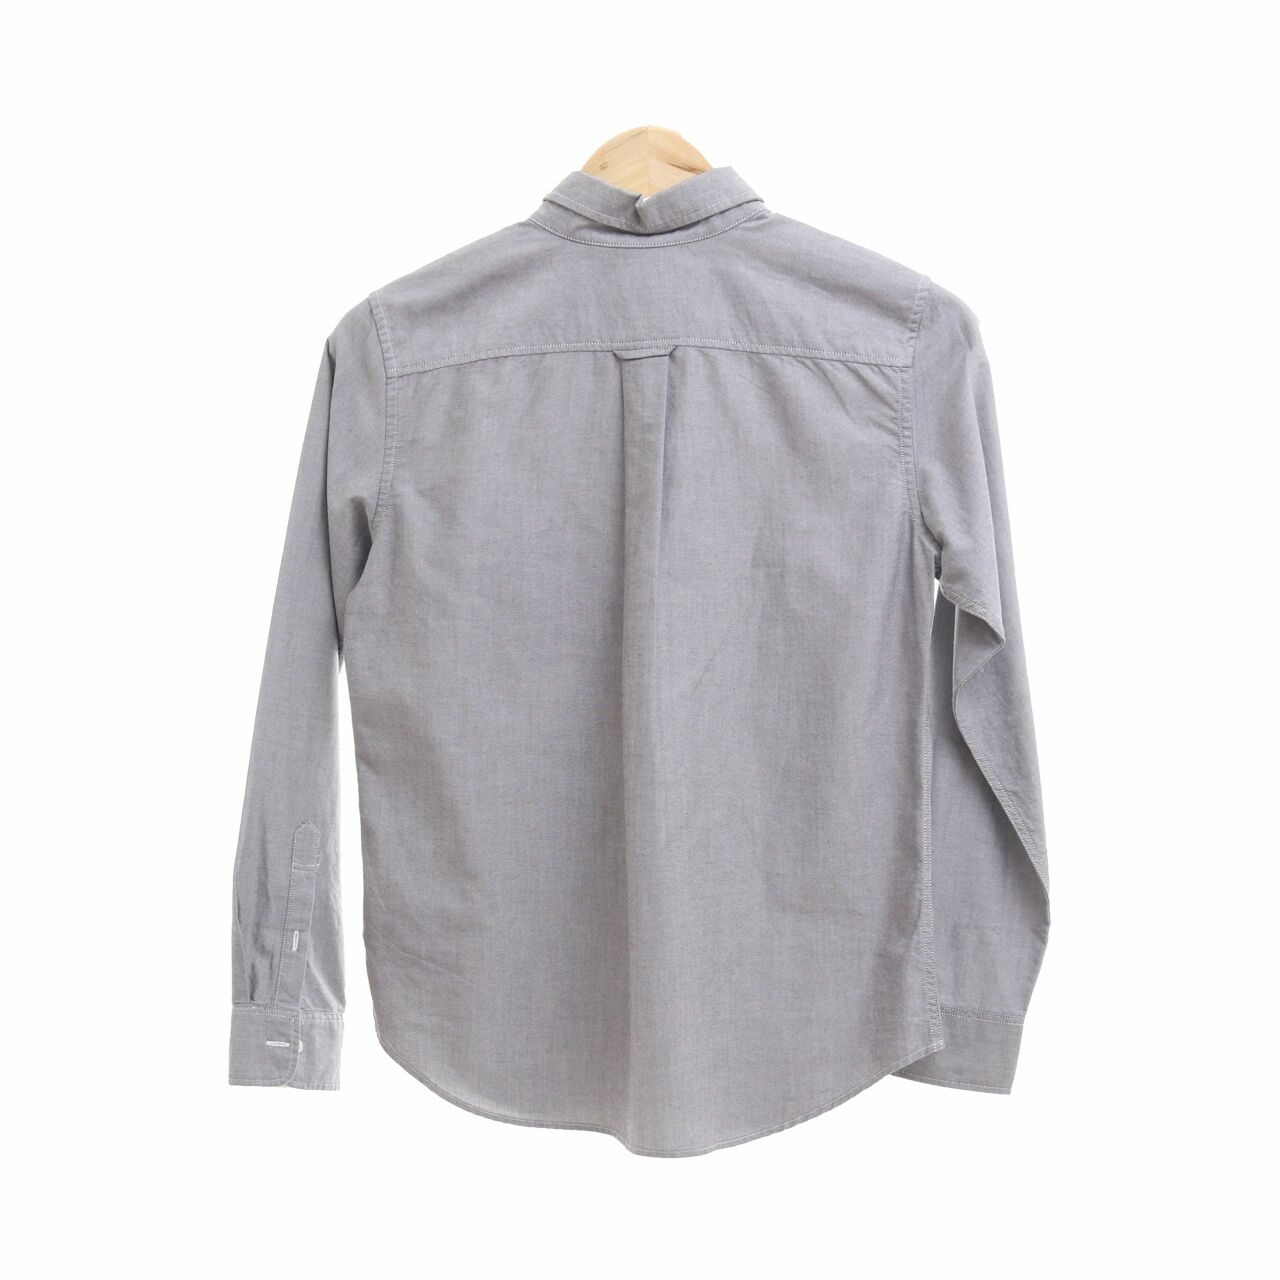 Uniqlo Grey Shirt